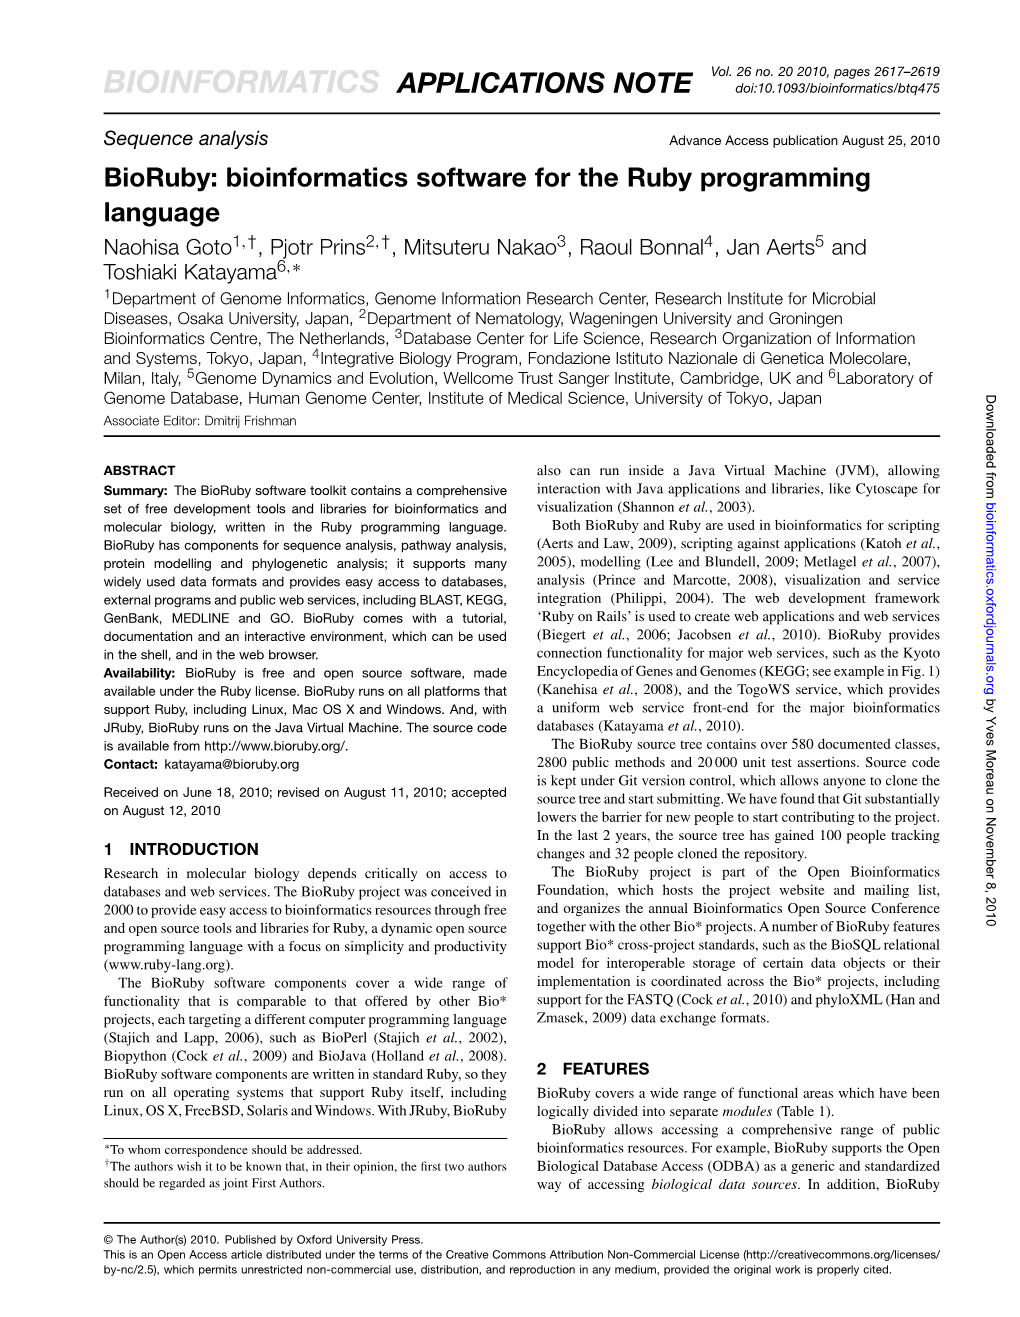 Bioruby: Bioinformatics Software for the Ruby Programming